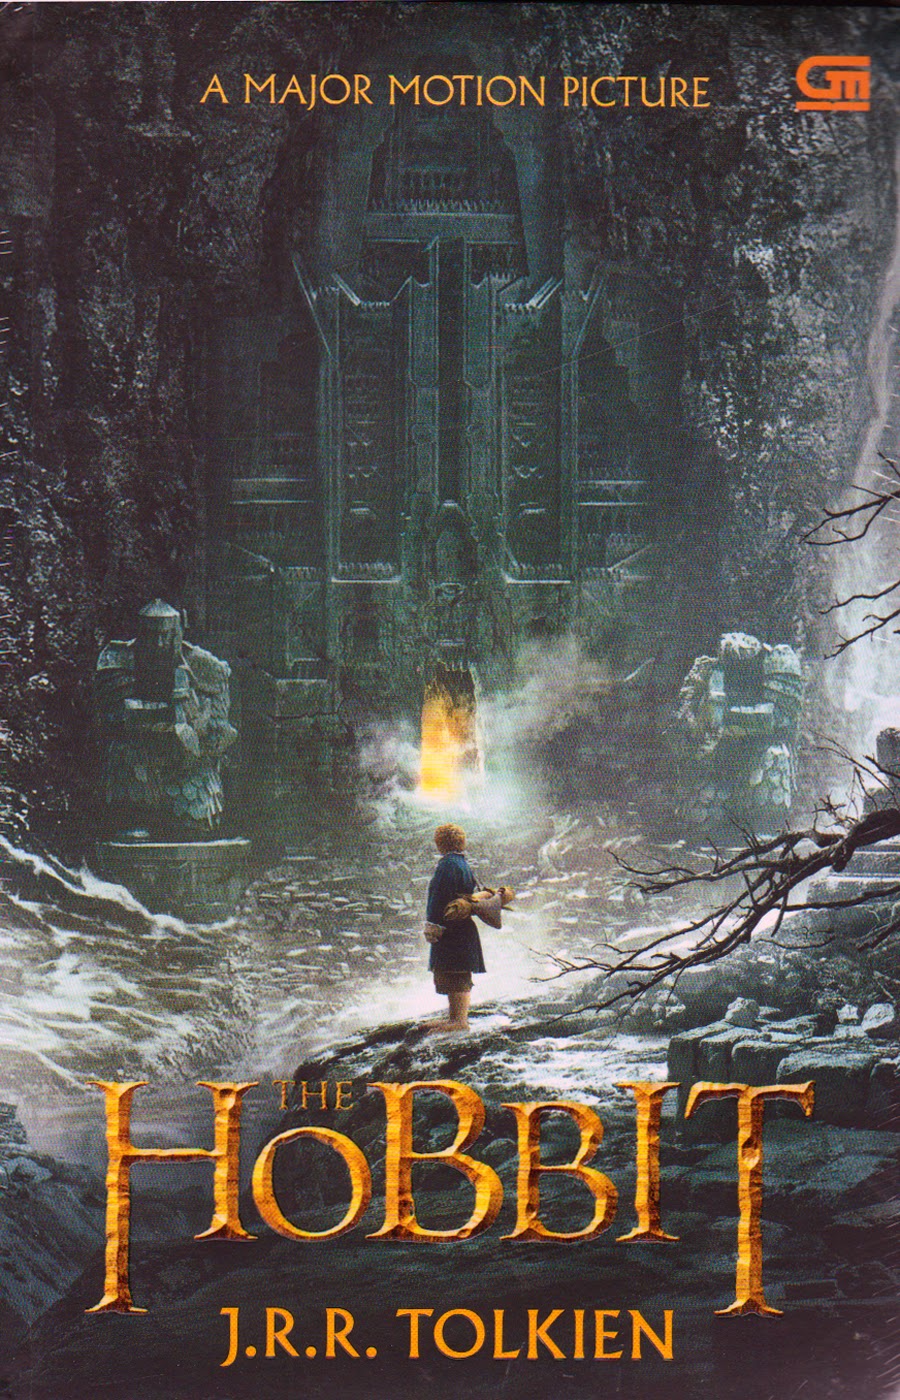 InfoGaya Buku: Novel The Hobbit - J.R.R. Tolkien (Edisi Cover Film